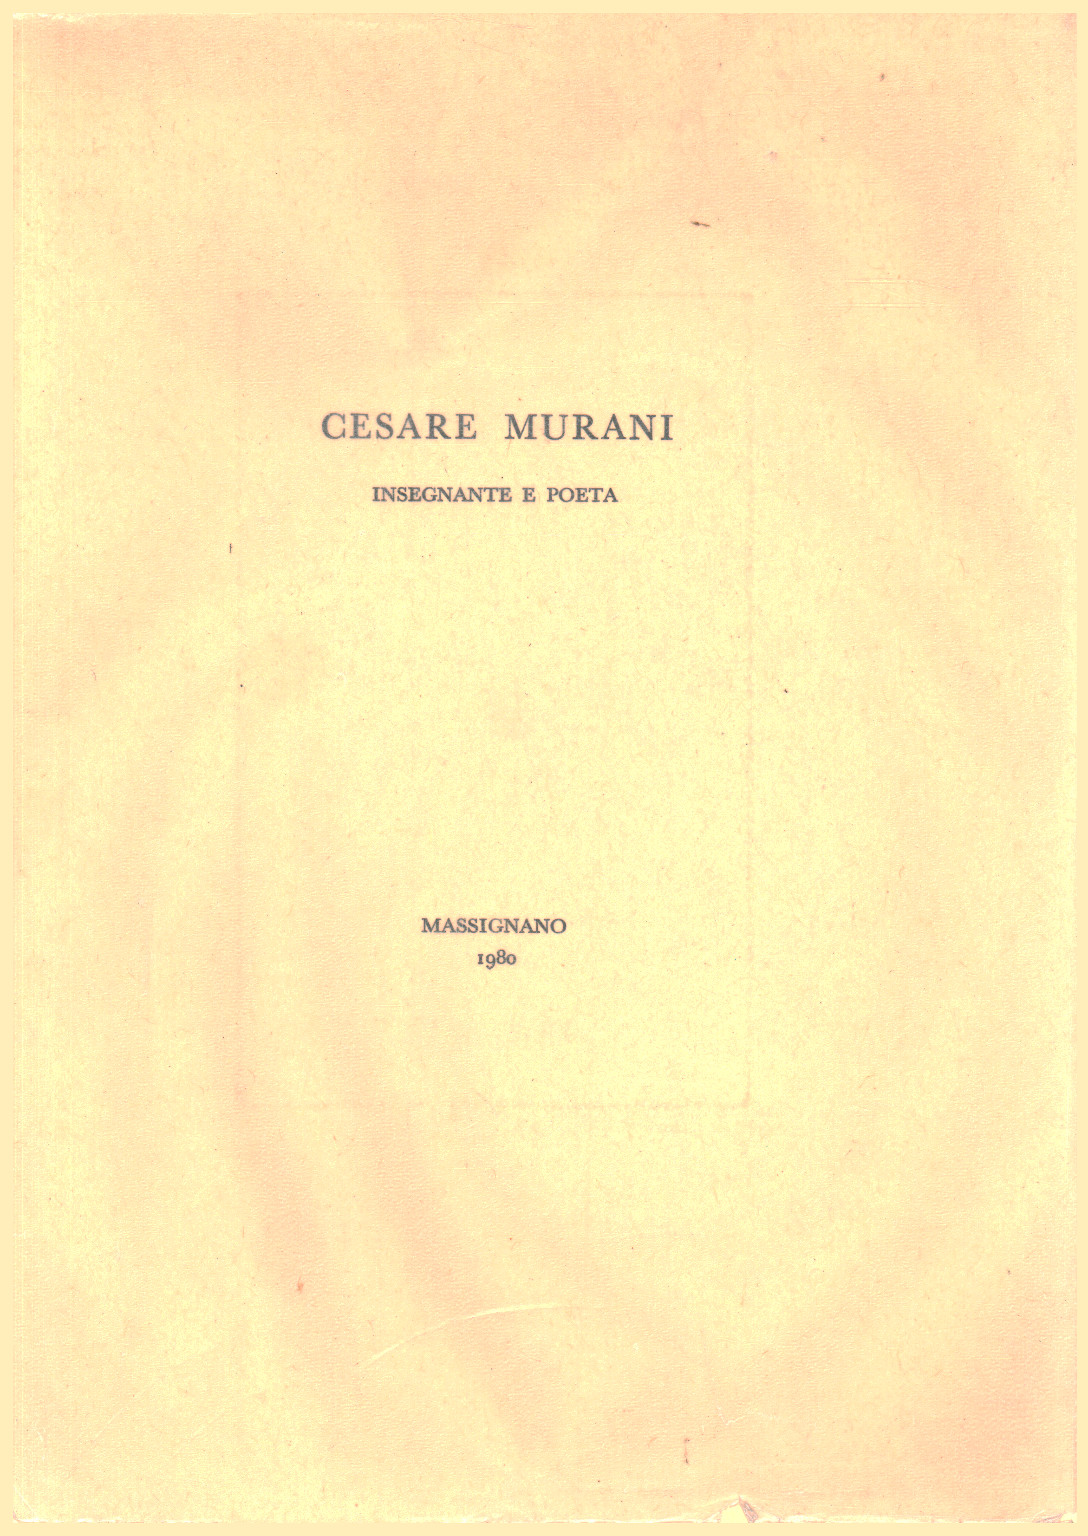 Cesare Murani. Profesor y poeta, s.una.